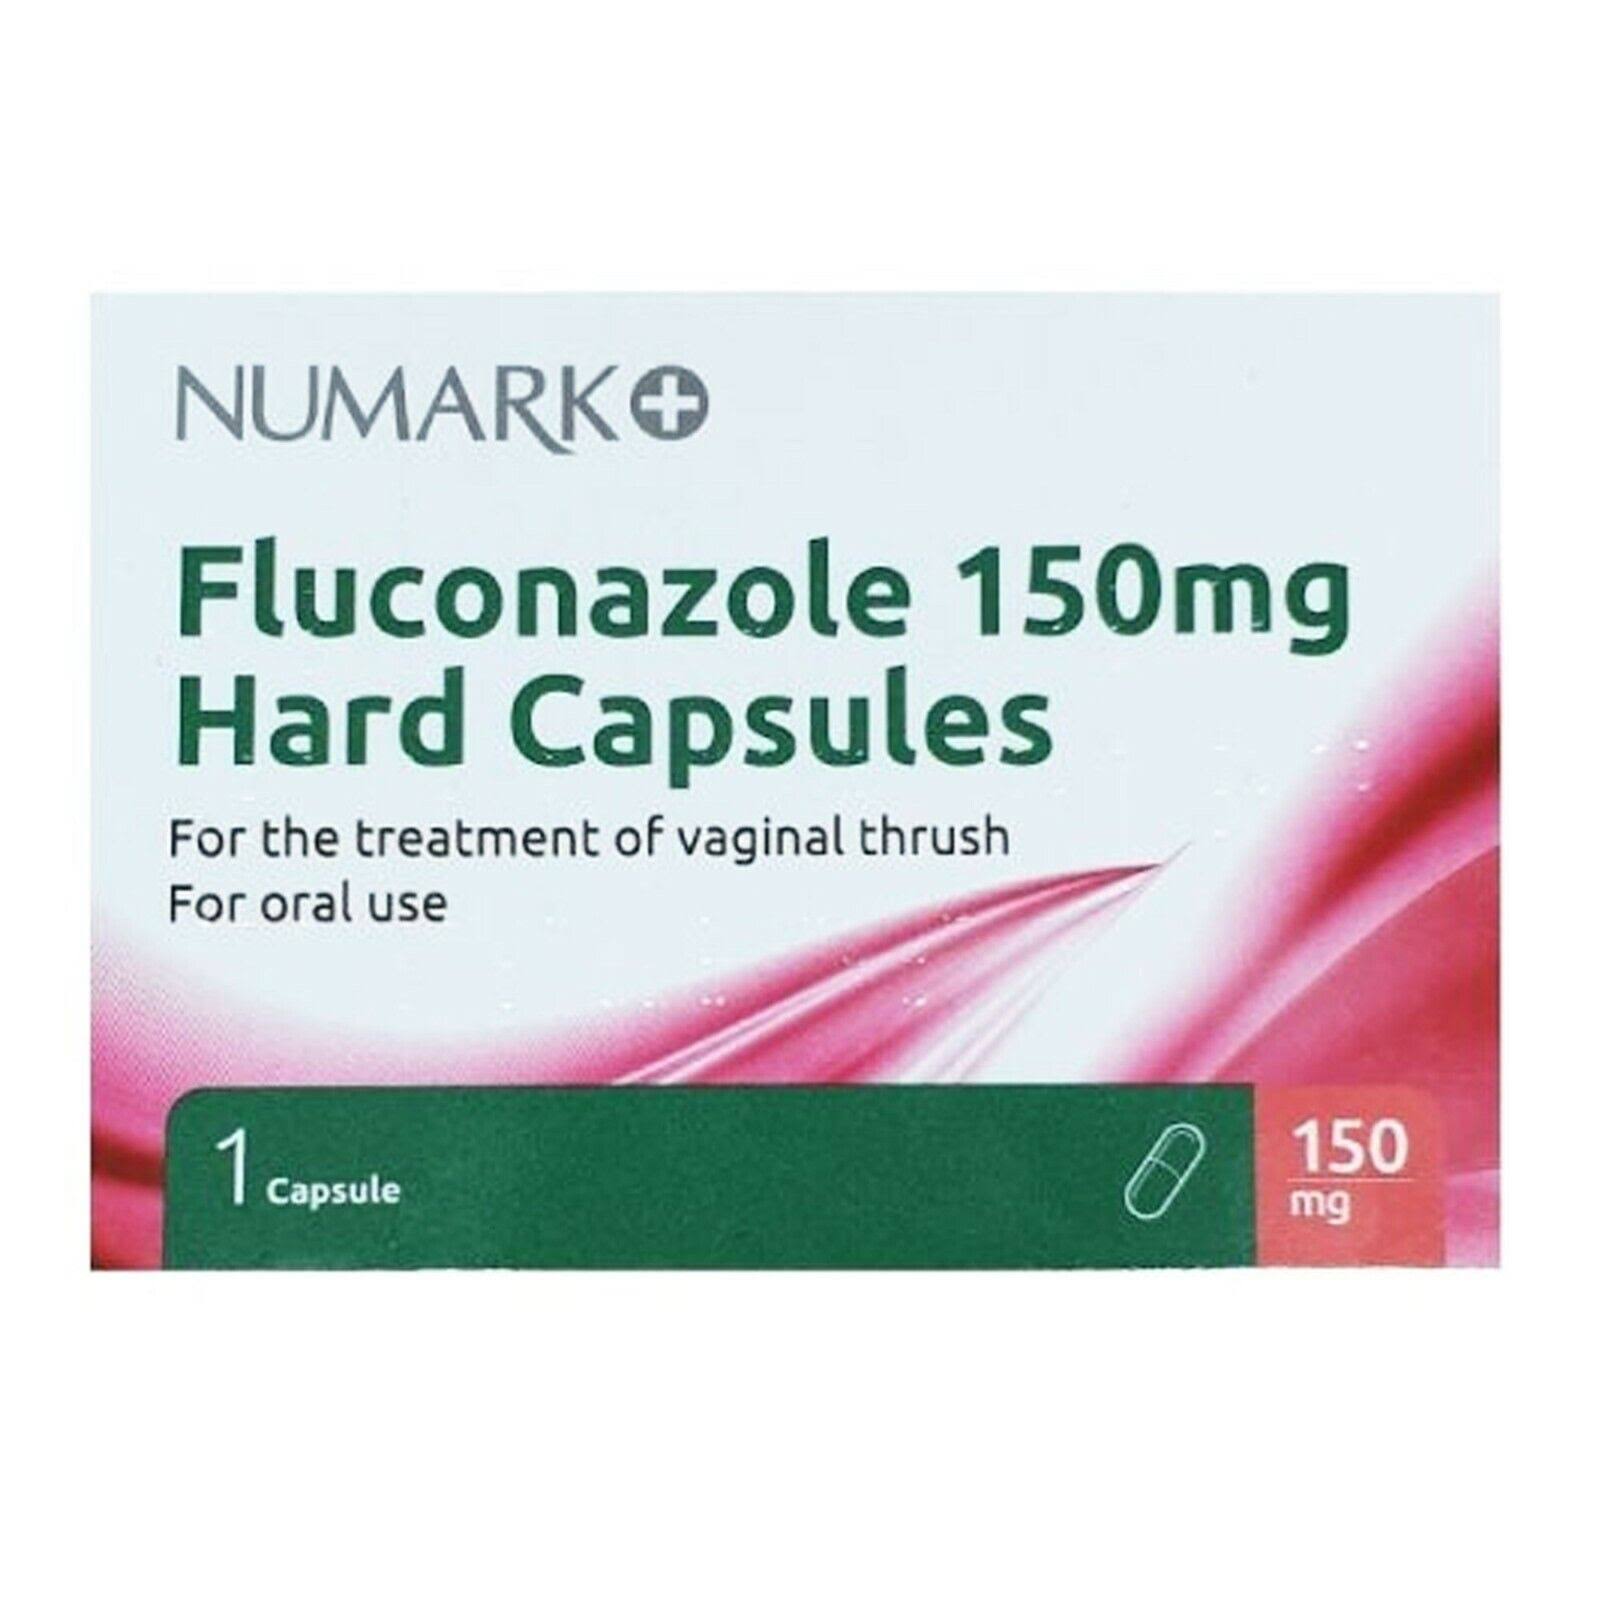 Numark Fluconazole Capsule - 150mg